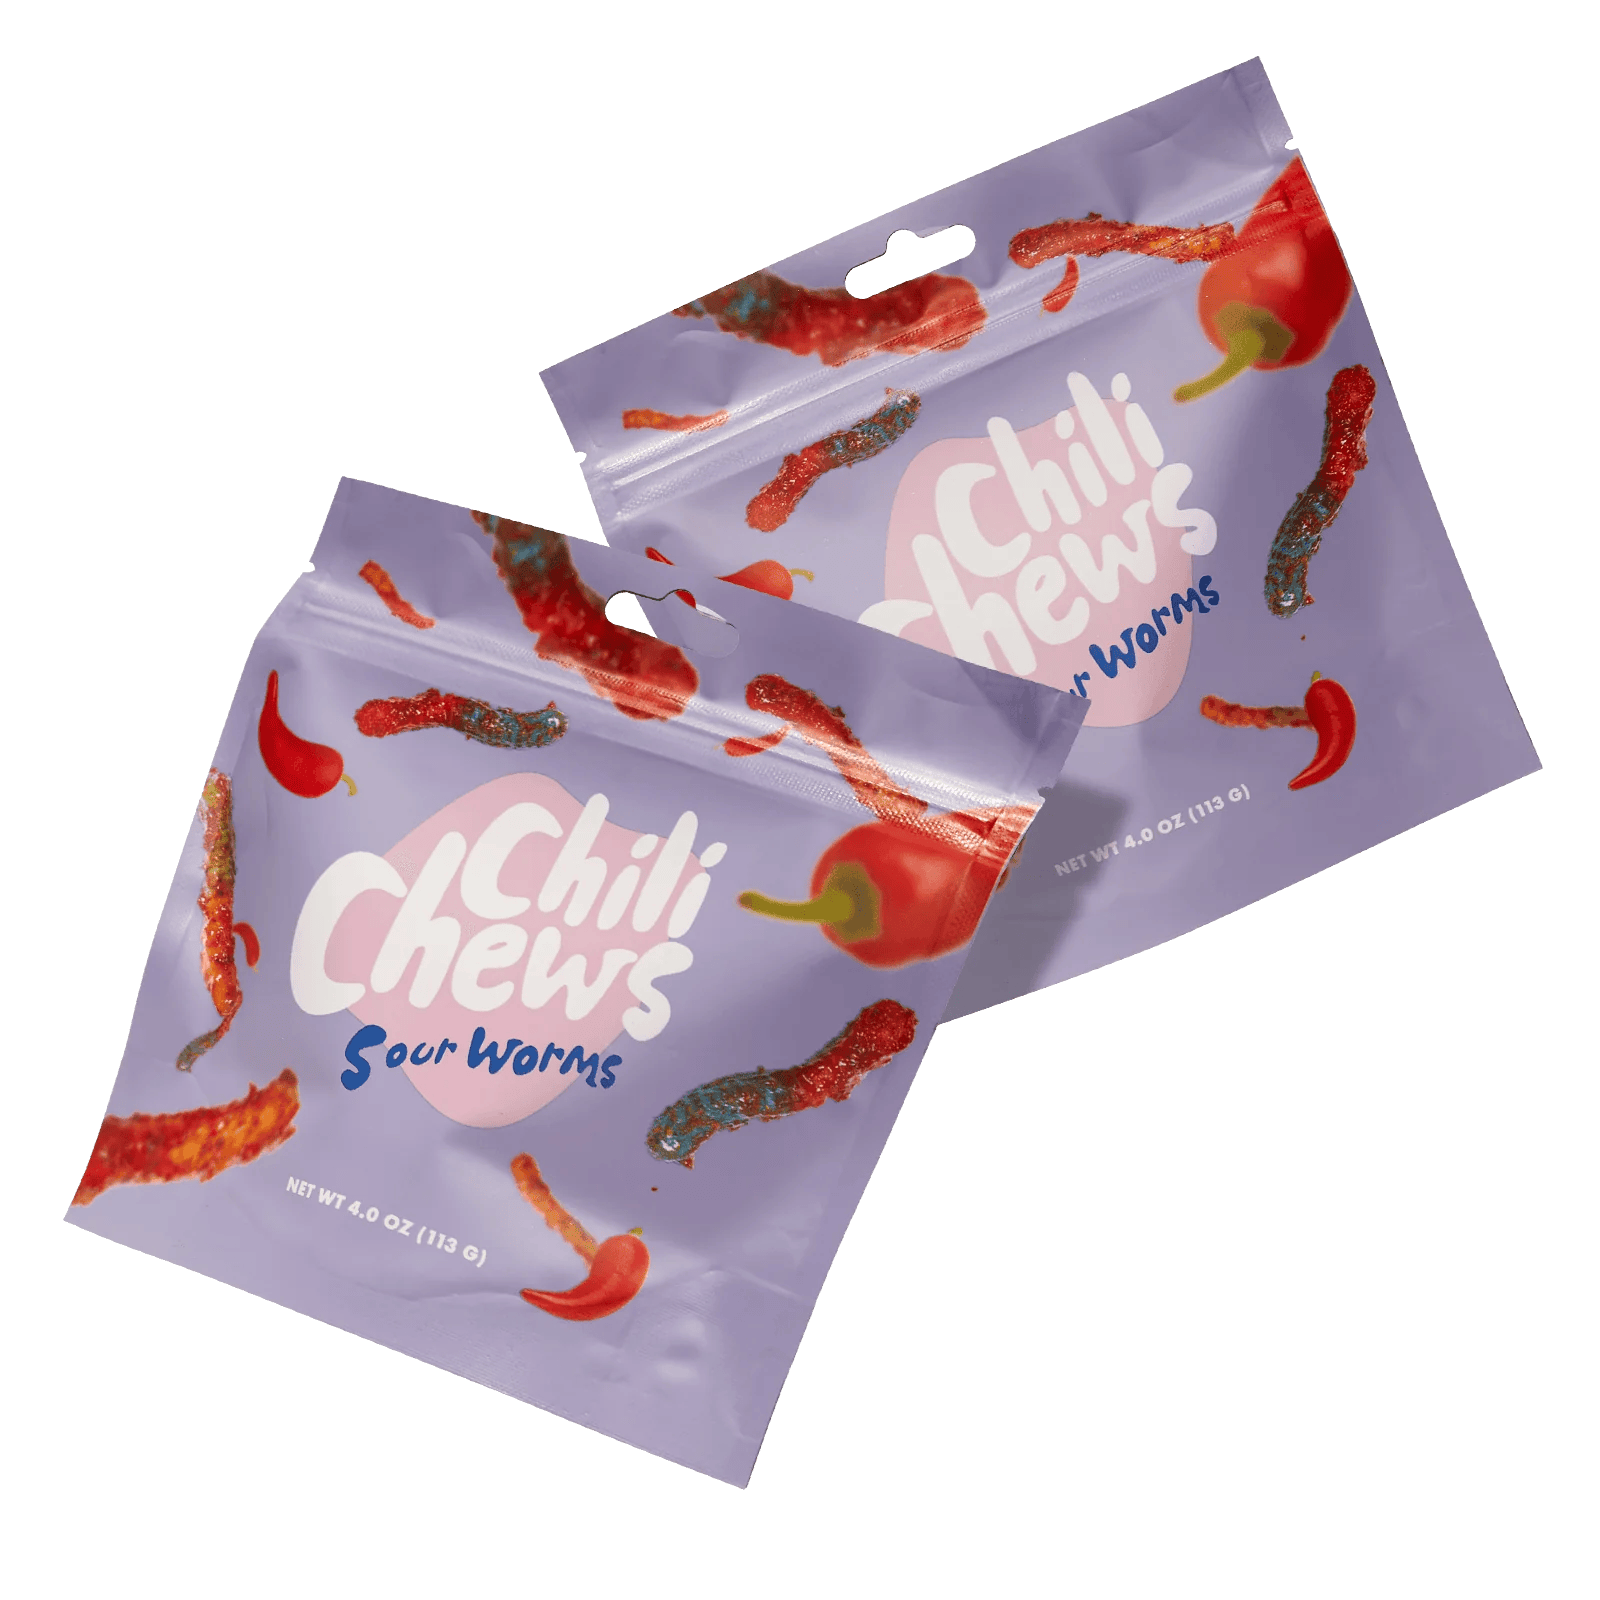 Chili Chews Review 3